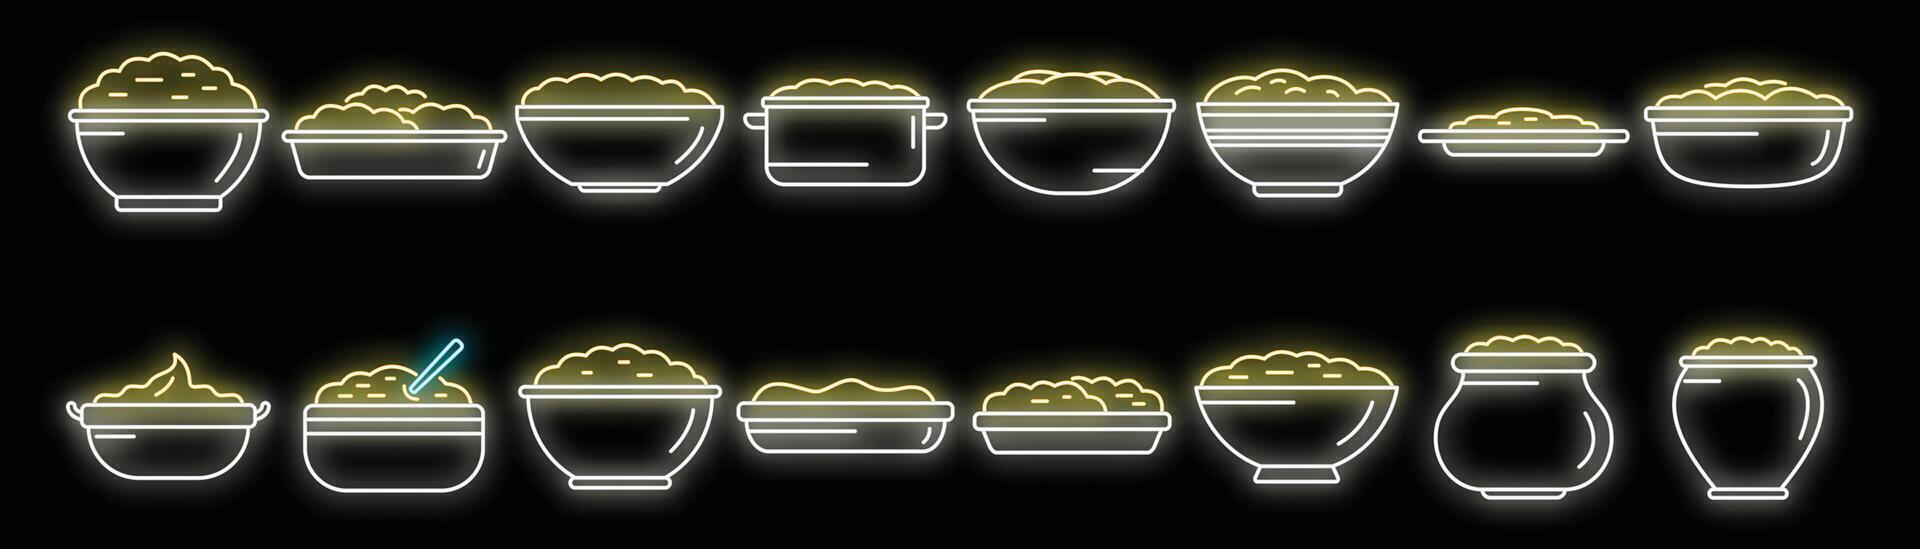 potatismos ikoner set vektor neon